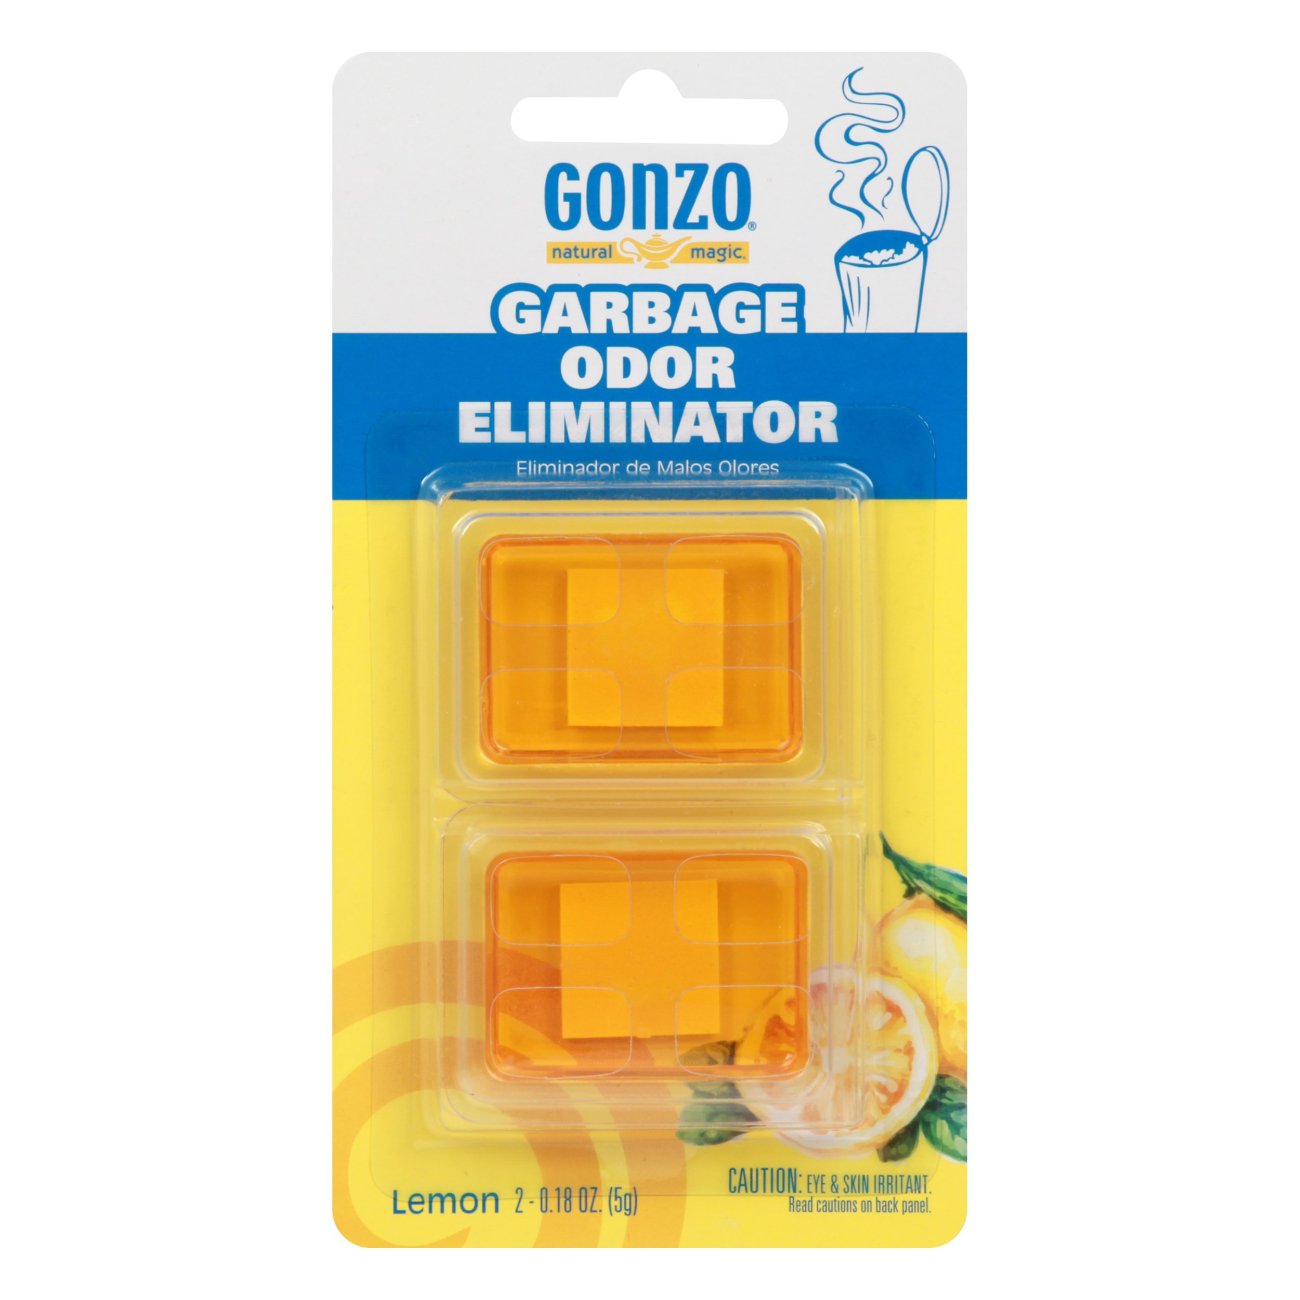 Gonzo Garbage Odor Eliminator, Outdoor Garbage Can Odor Eliminator